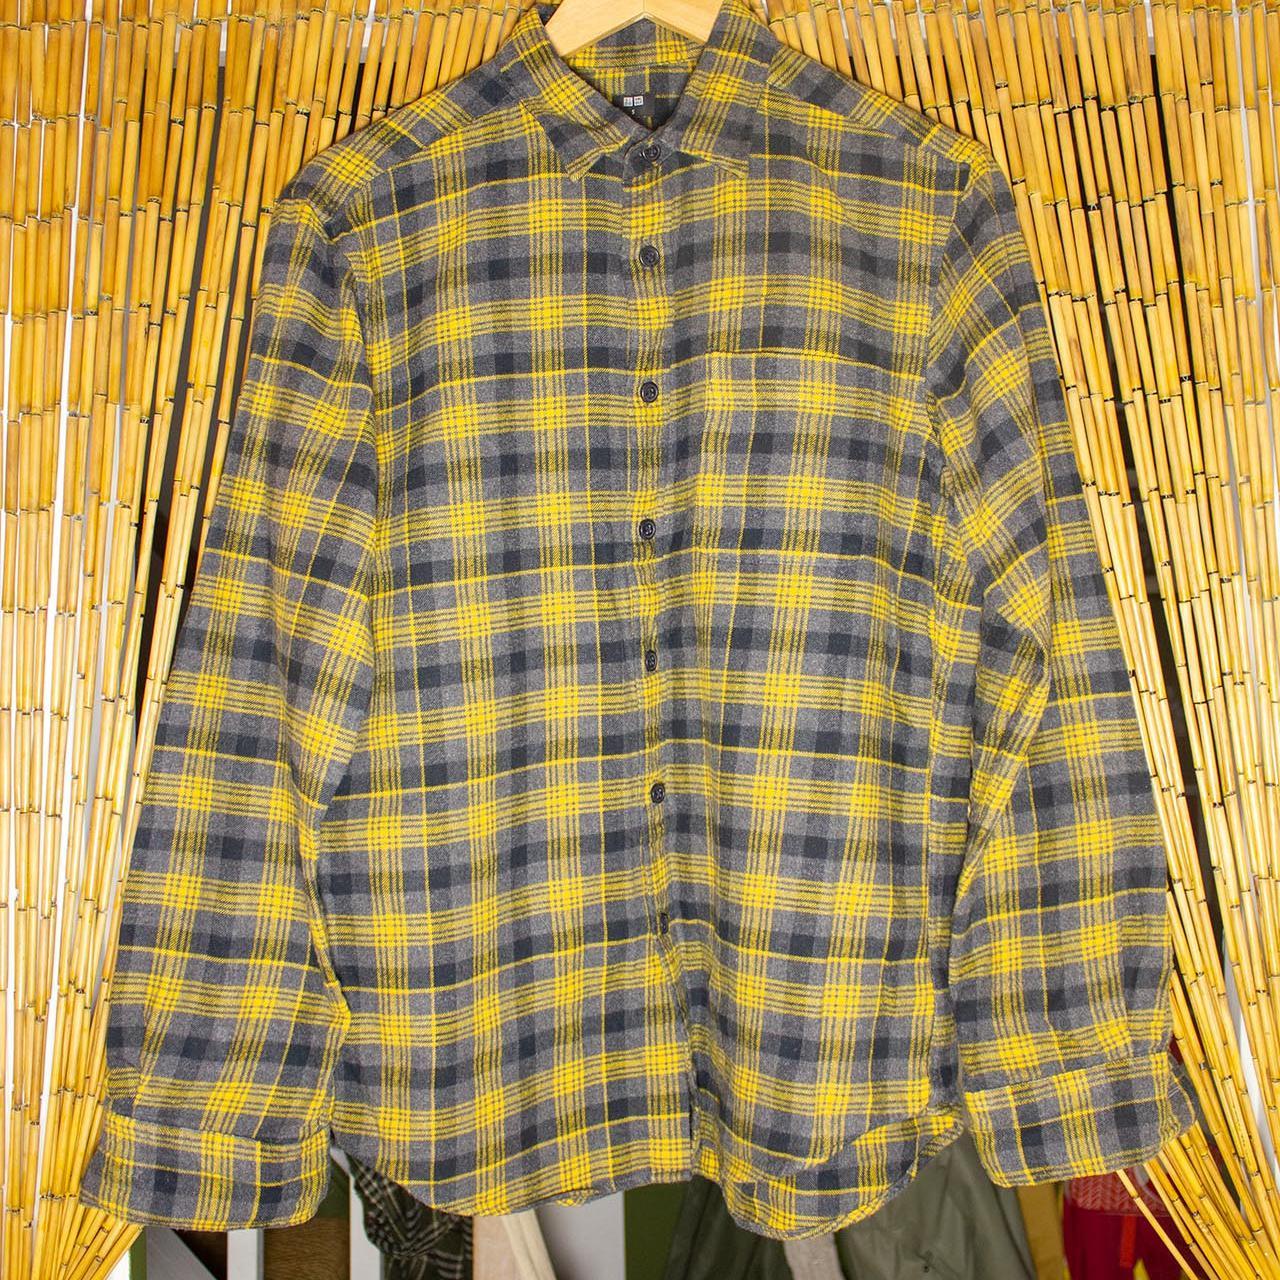 Product Image 1 - Uniqlo plaid shirt.

Beautiful plaid/flannel shirt